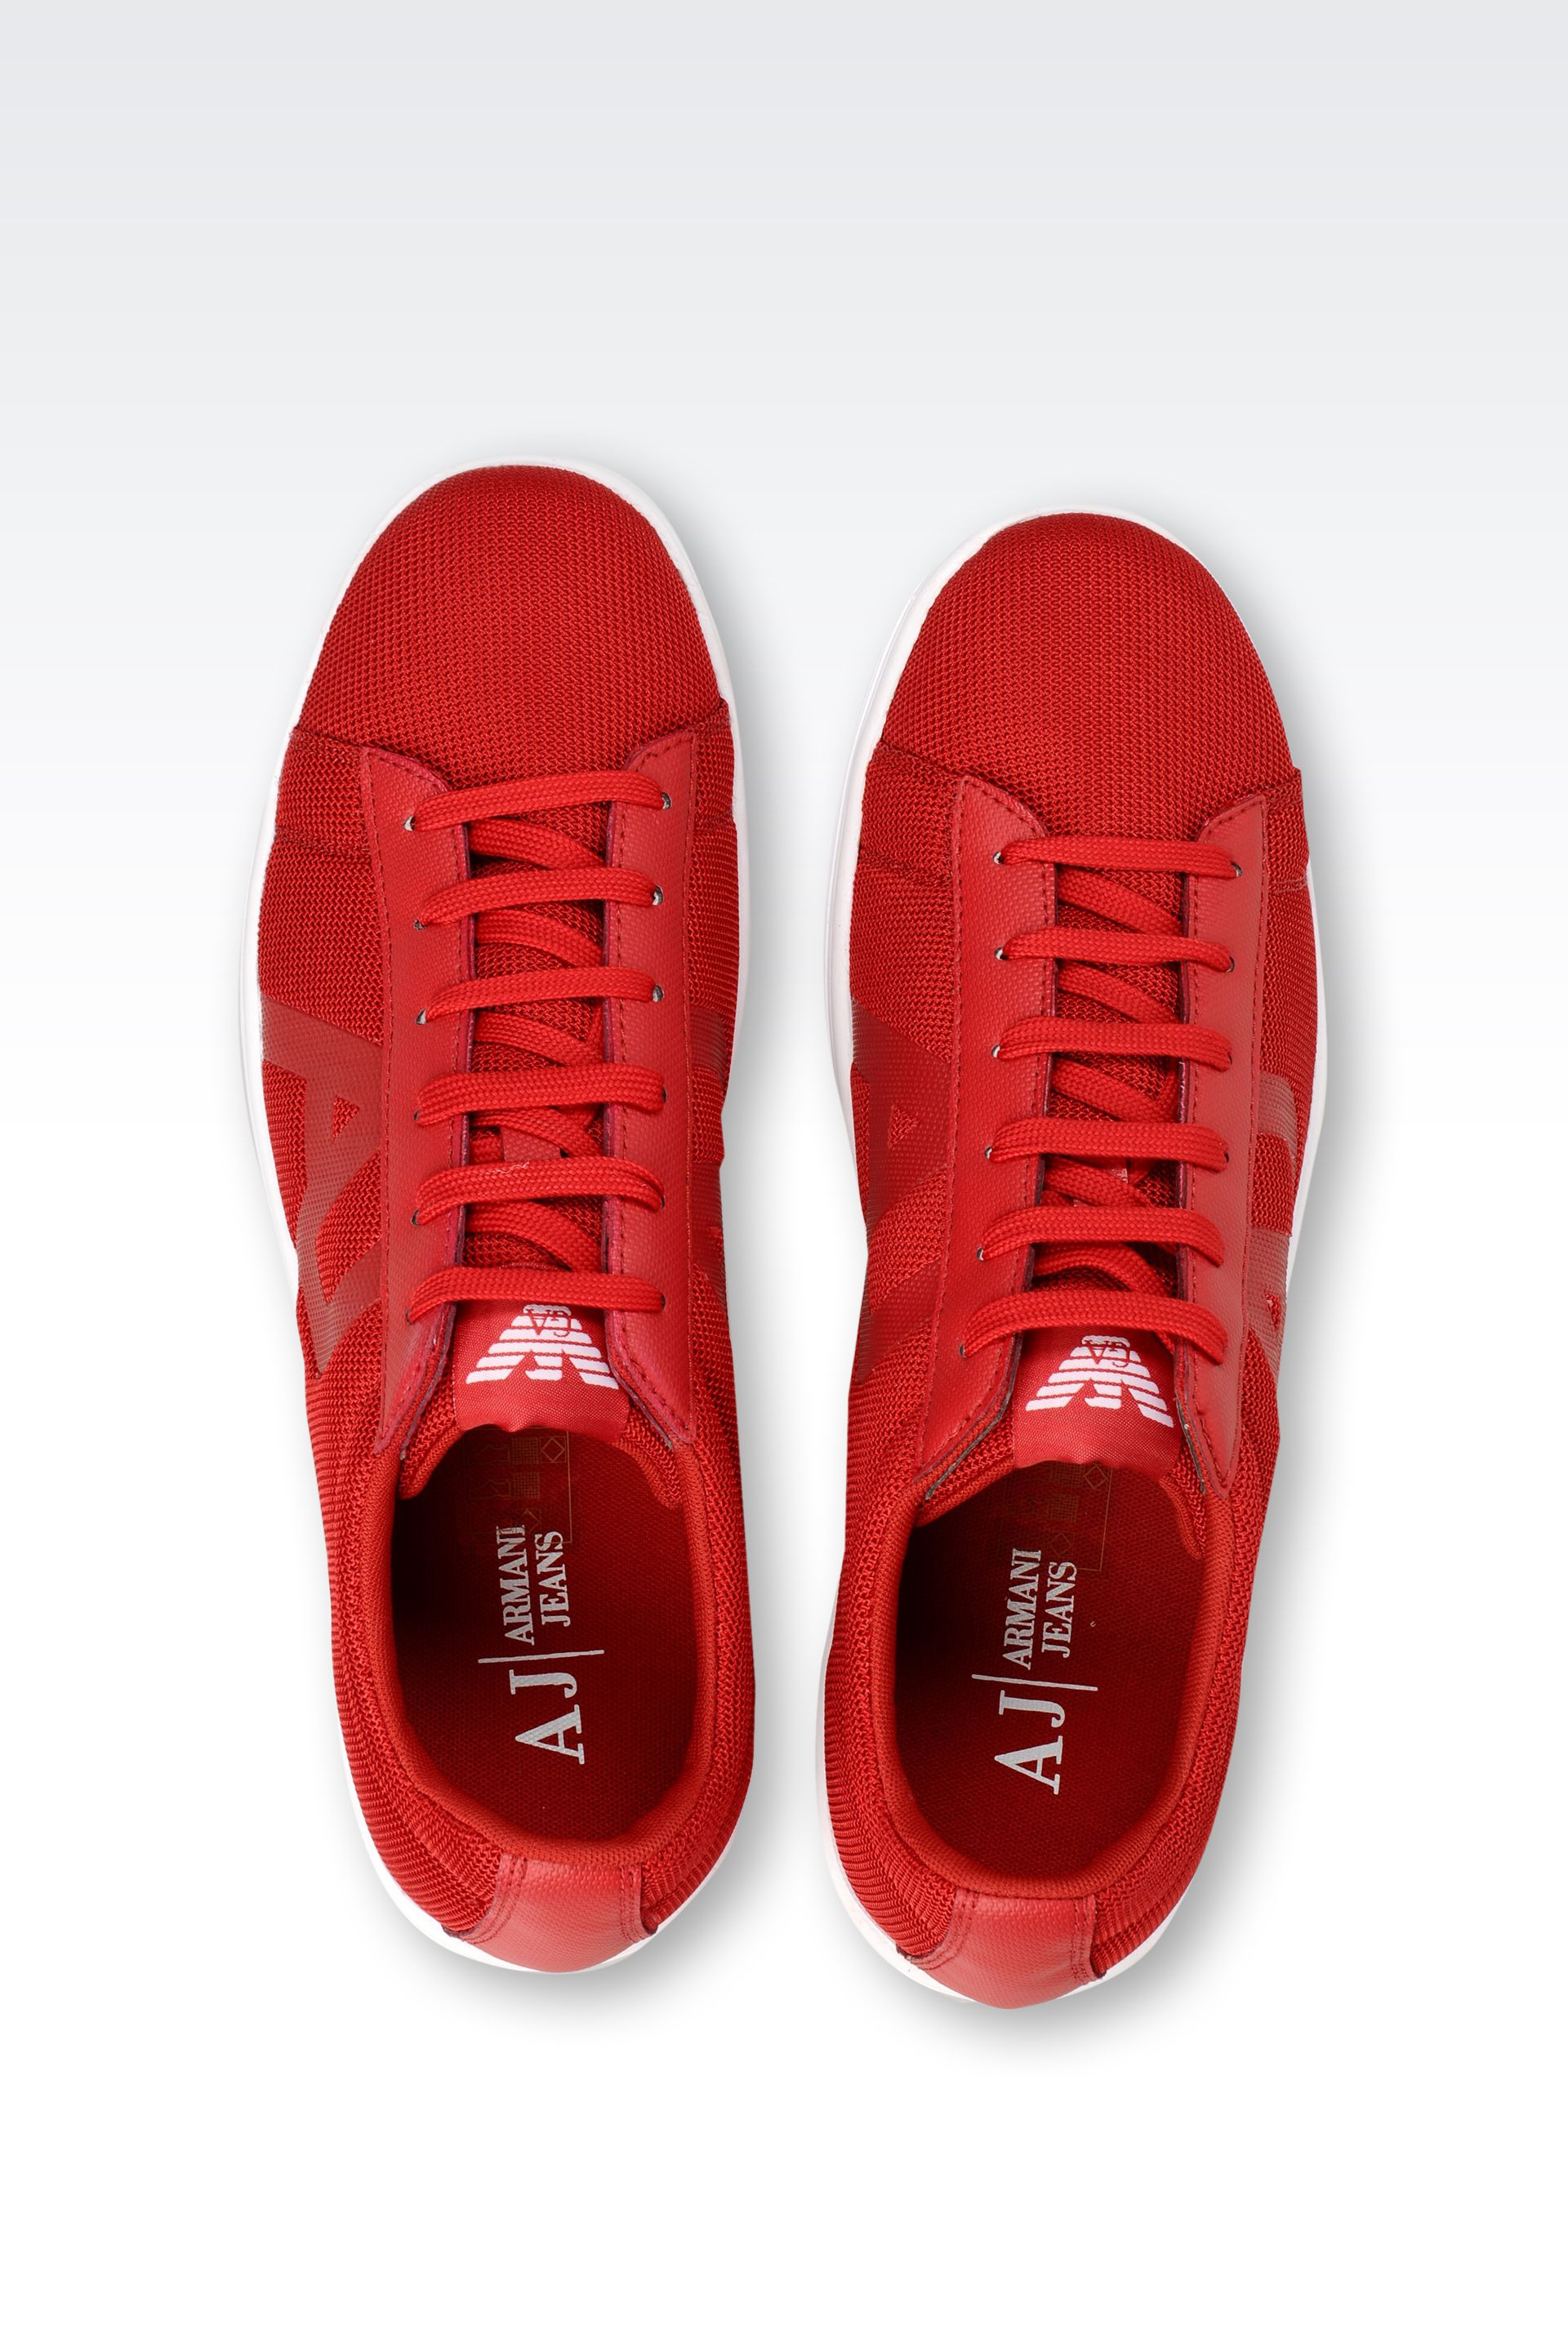 reference Indgang trend AJF,armani red shoes,westdenverweather.com